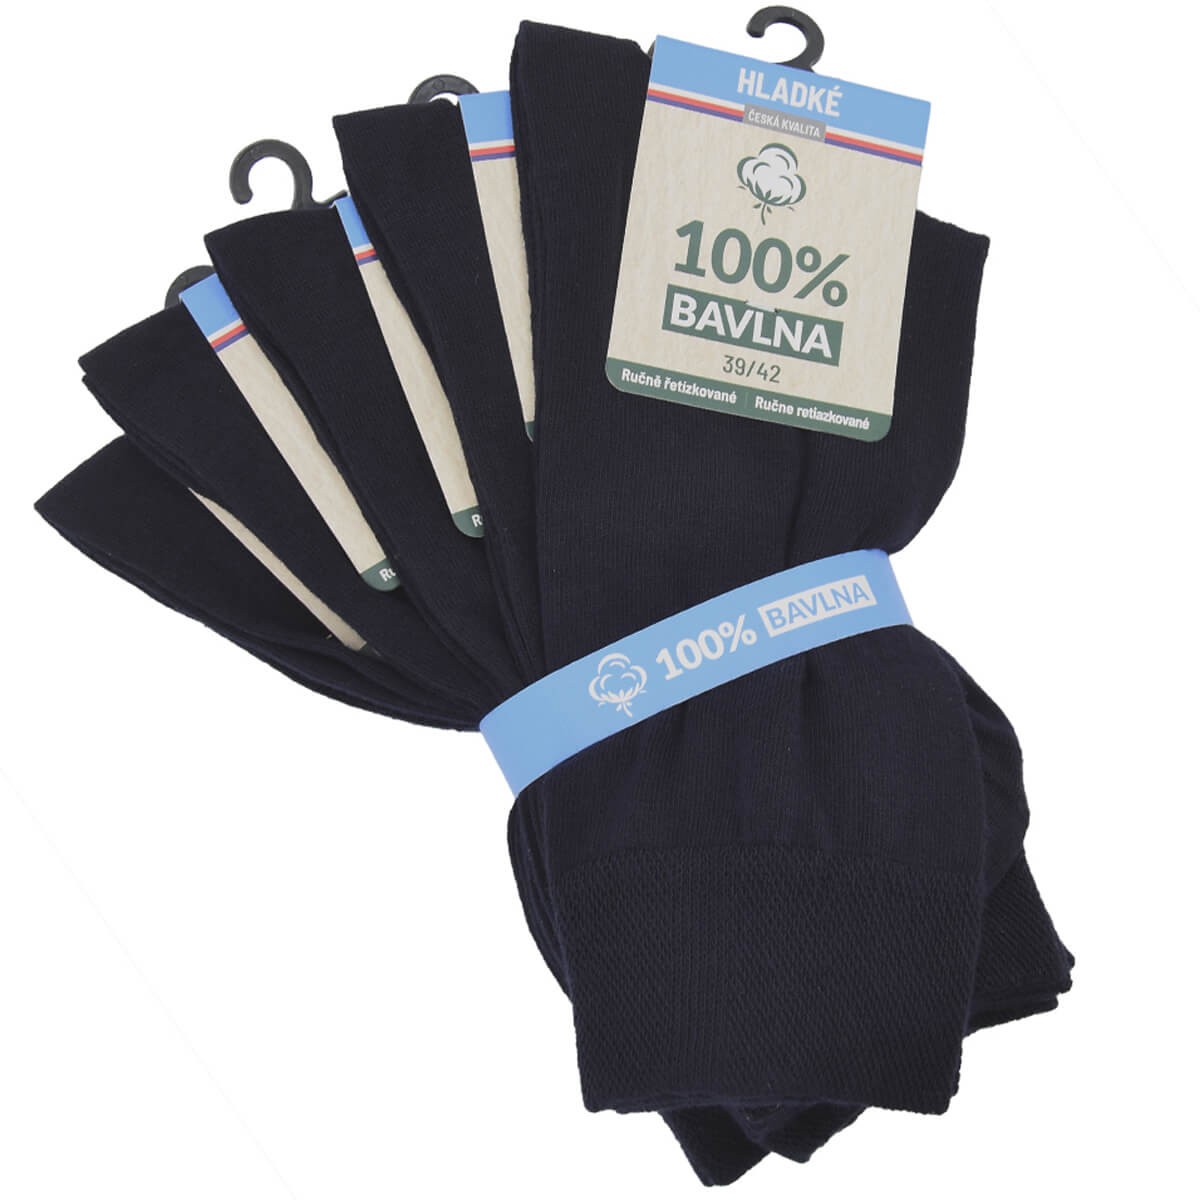 Hladké jednobarevné 100% bavlněné ponožky RS